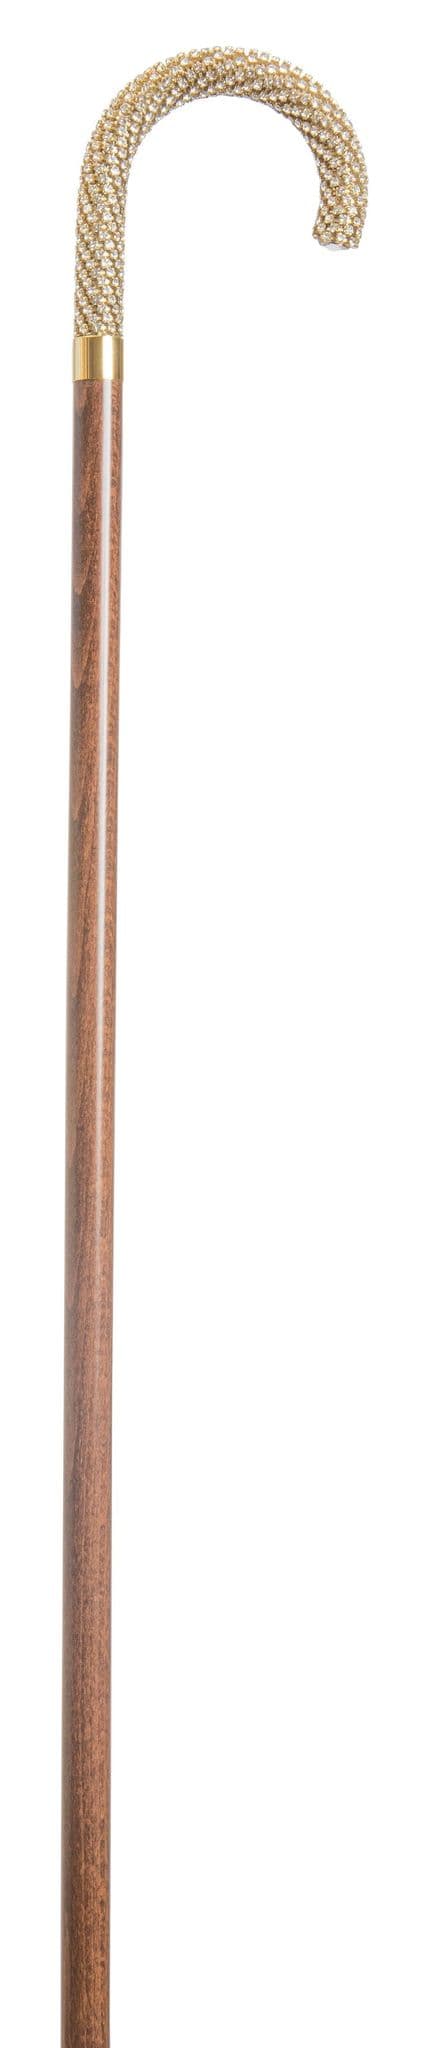 Classic Canes hardwood crook with Swarovski Elements handle